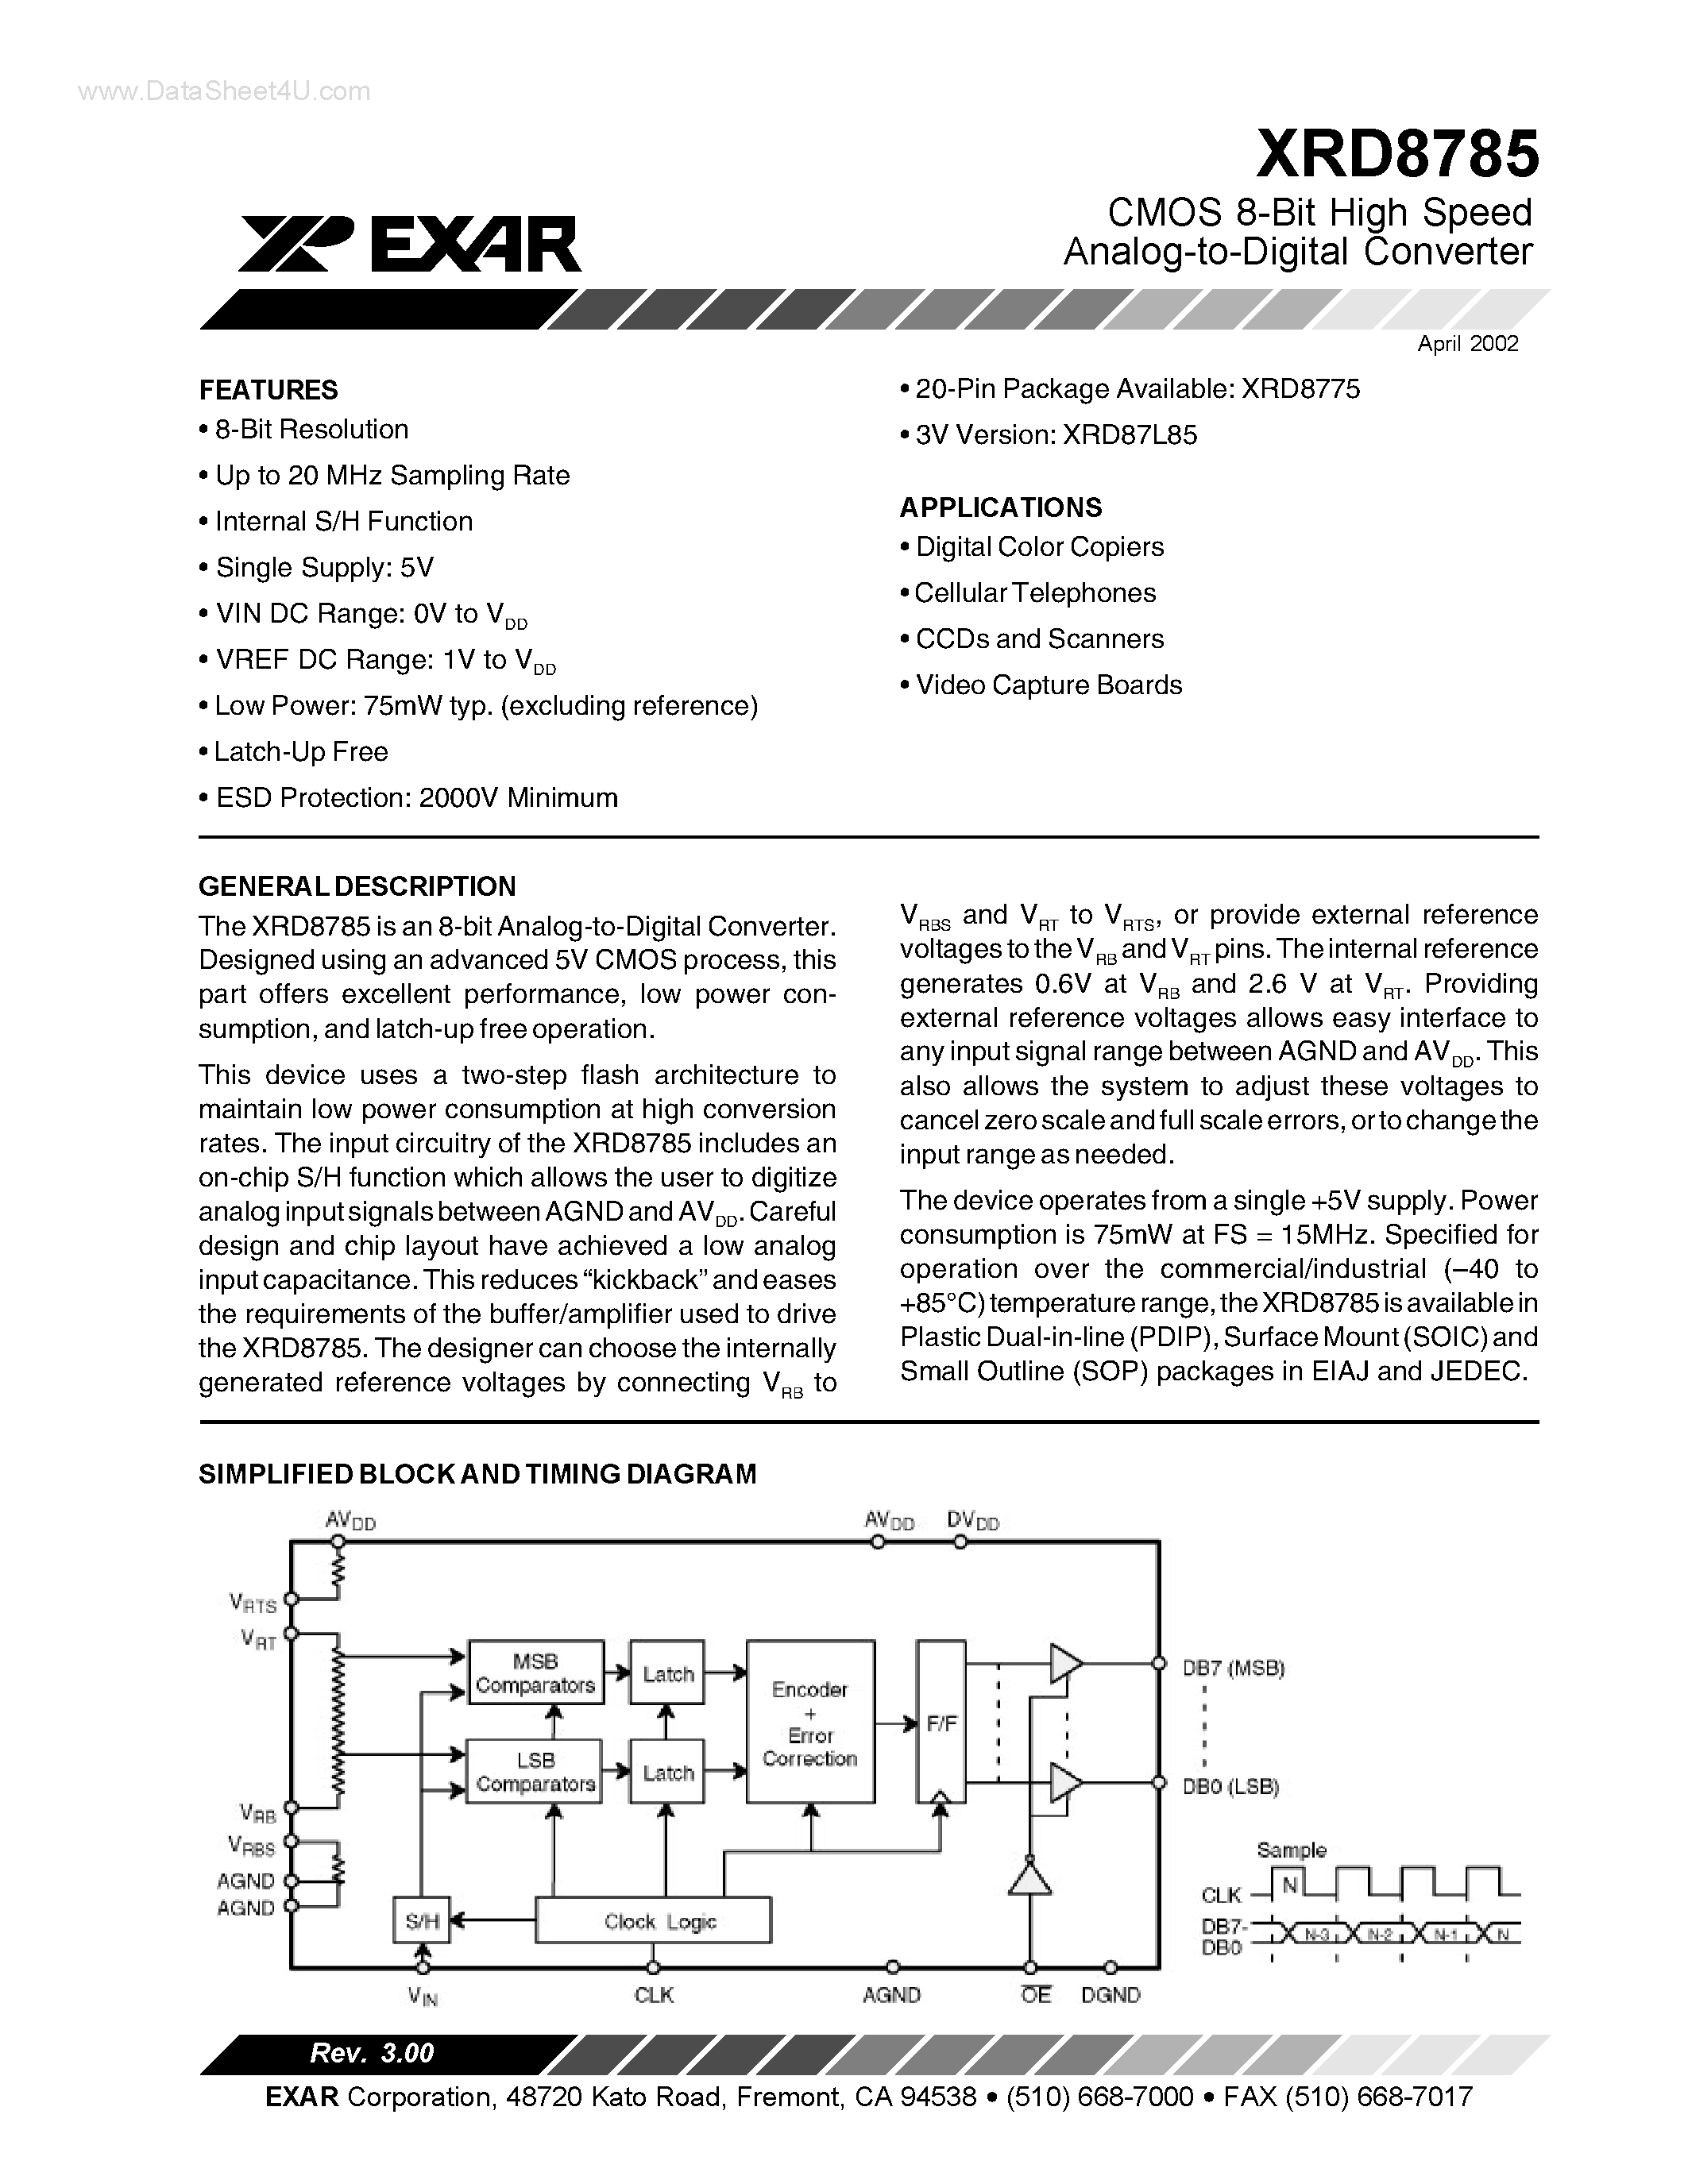 Даташит XRD8785 - CMOS 8-Bit High Speed Analog-to-Digital Converter страница 1